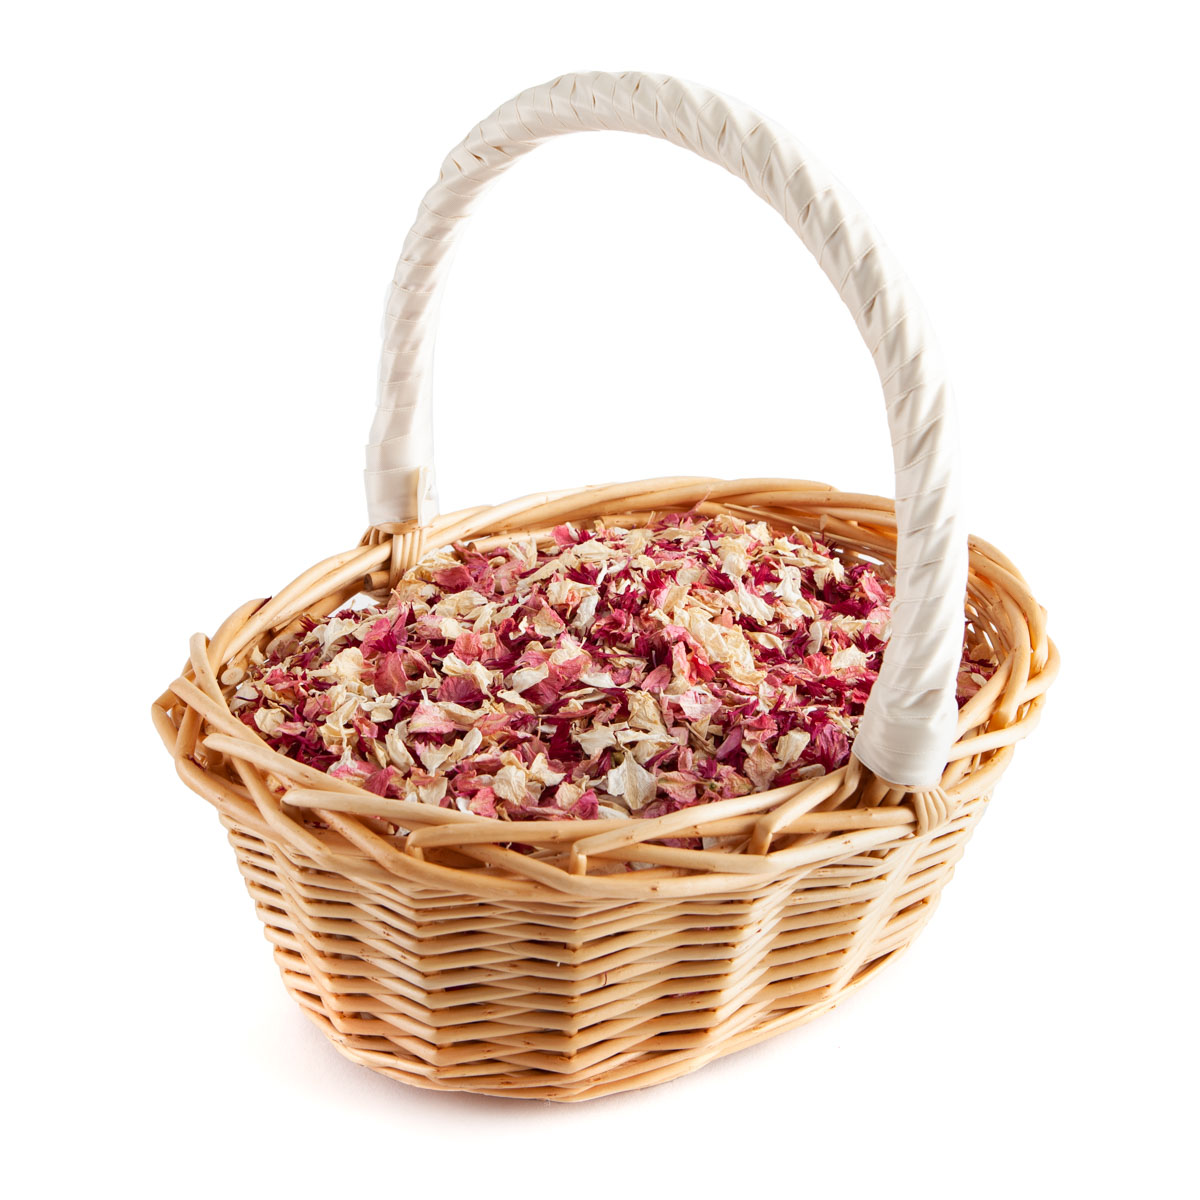 Ruby Twist confetti petals - Biodegradable Confetti - Real Flower Petal Confetti - Basket